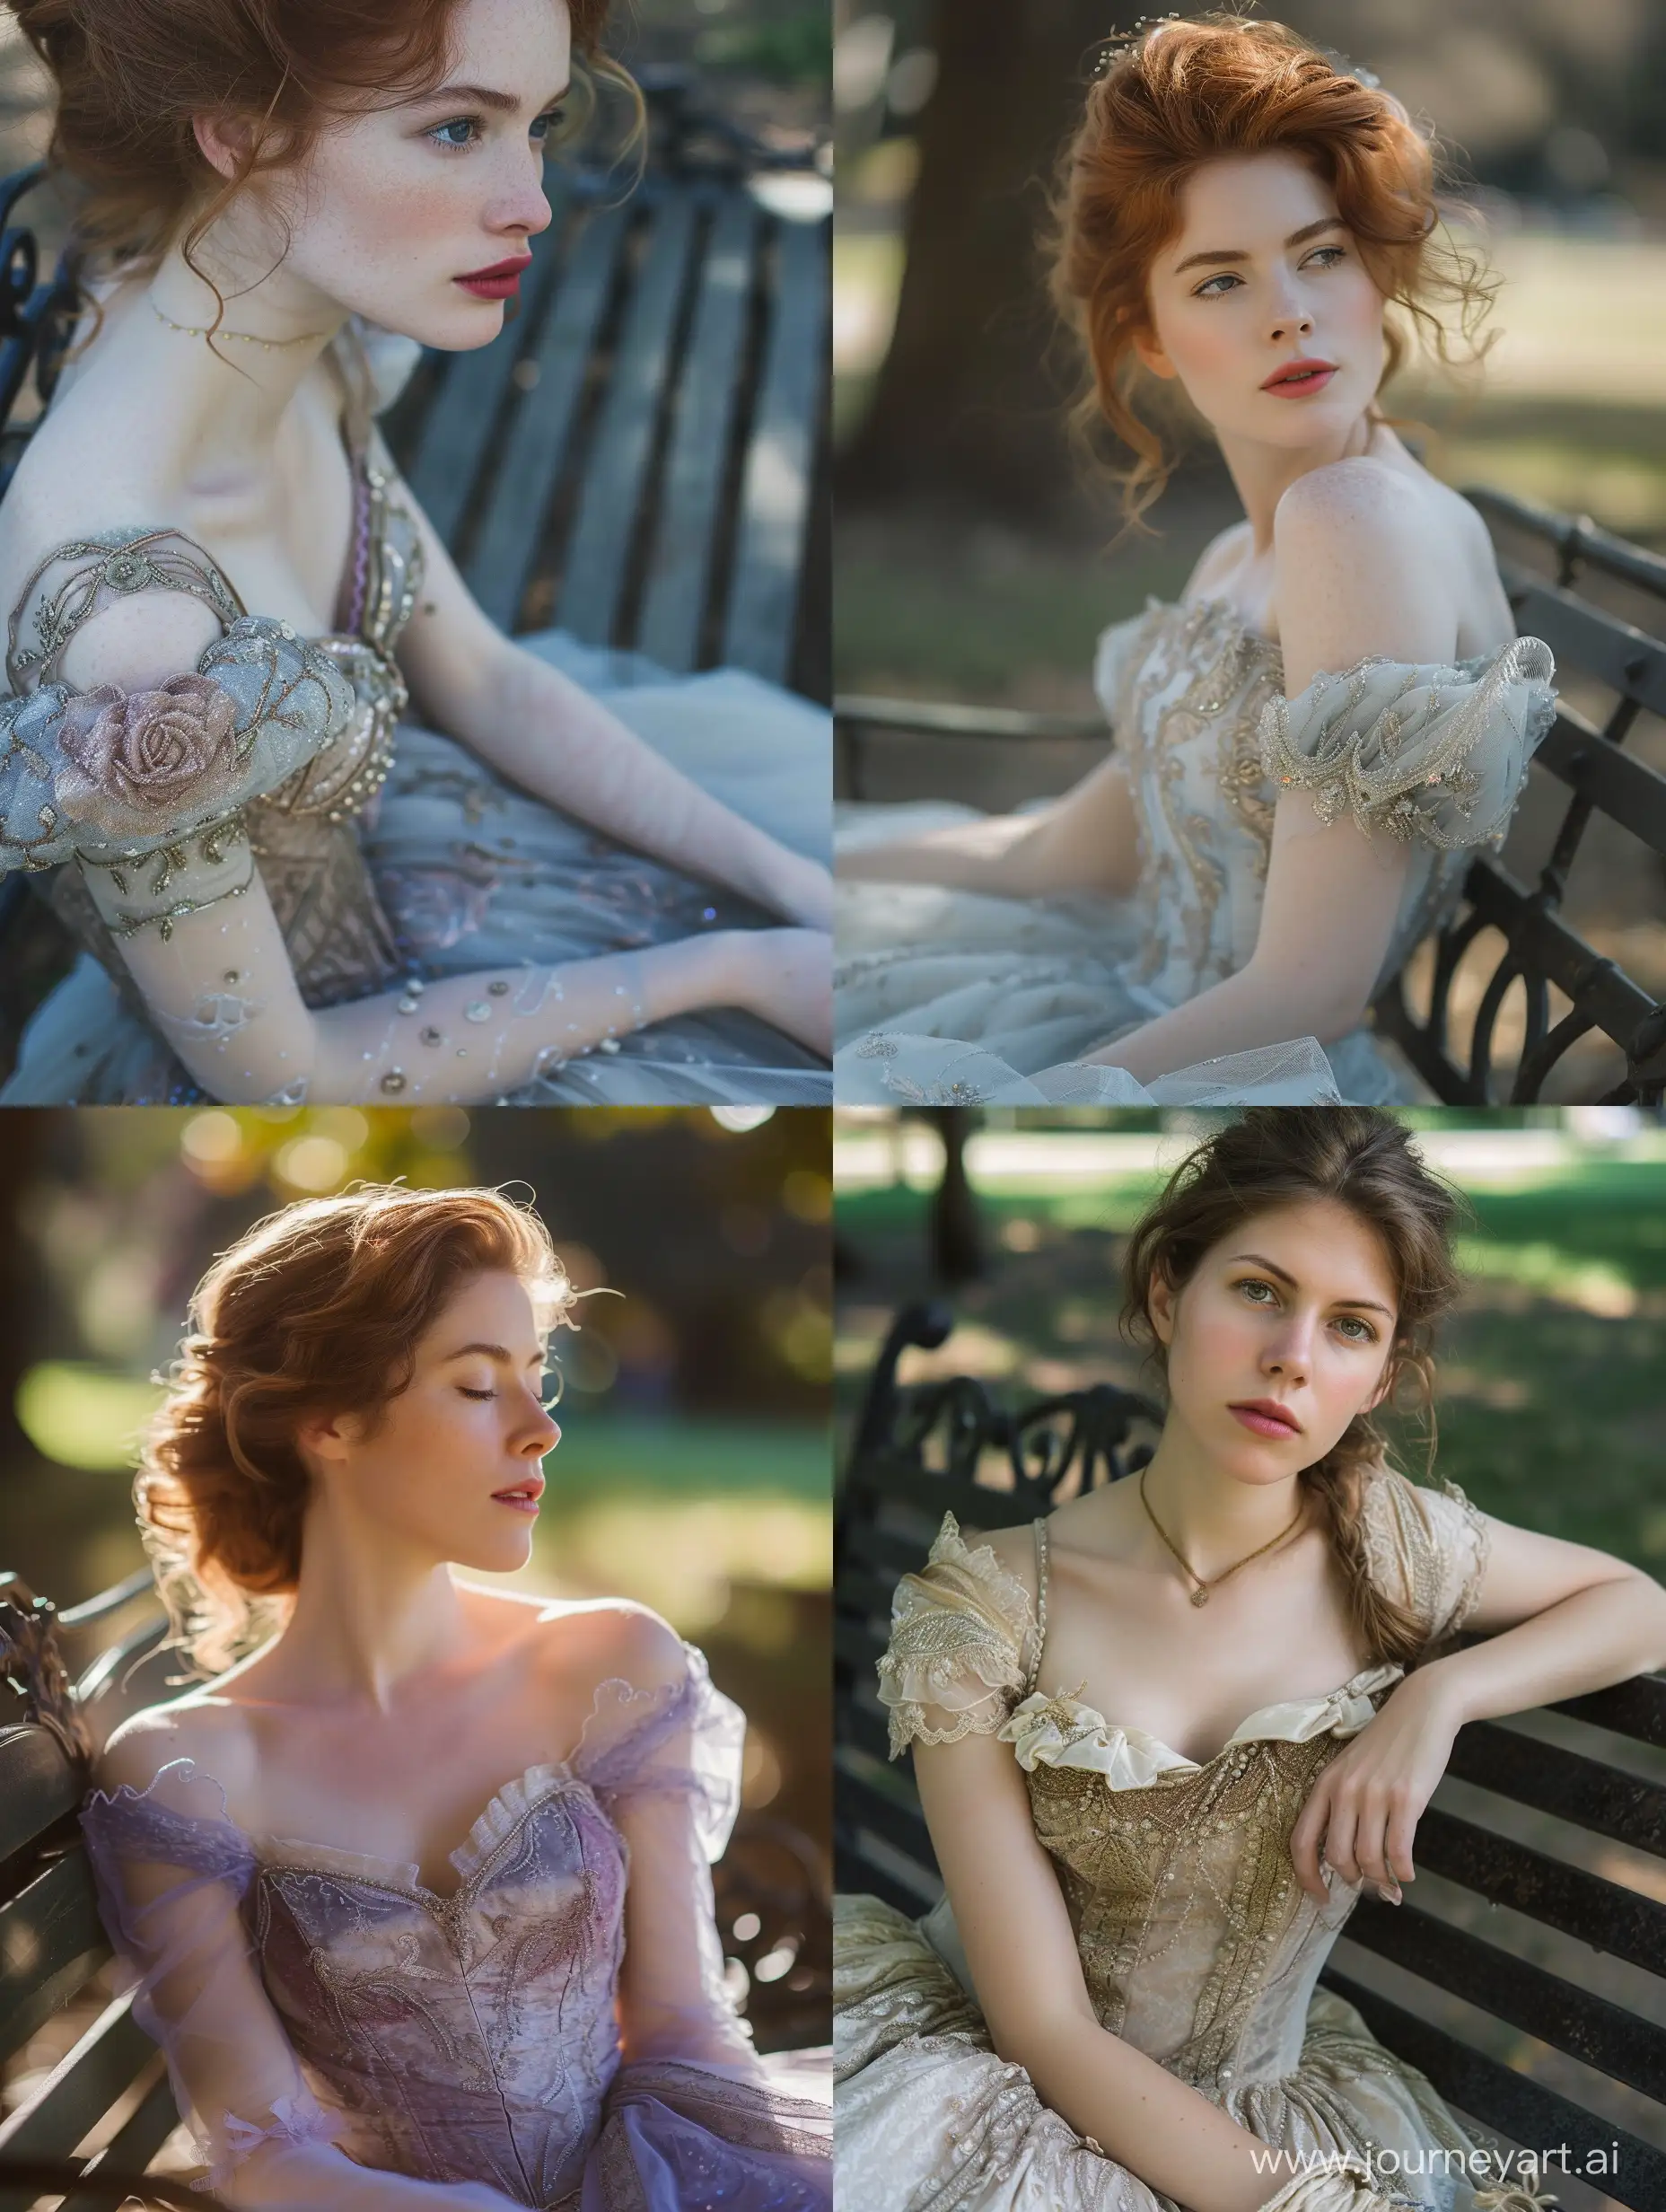 Amy-Adams-in-Enchanting-Princess-Dress-on-Park-Bench